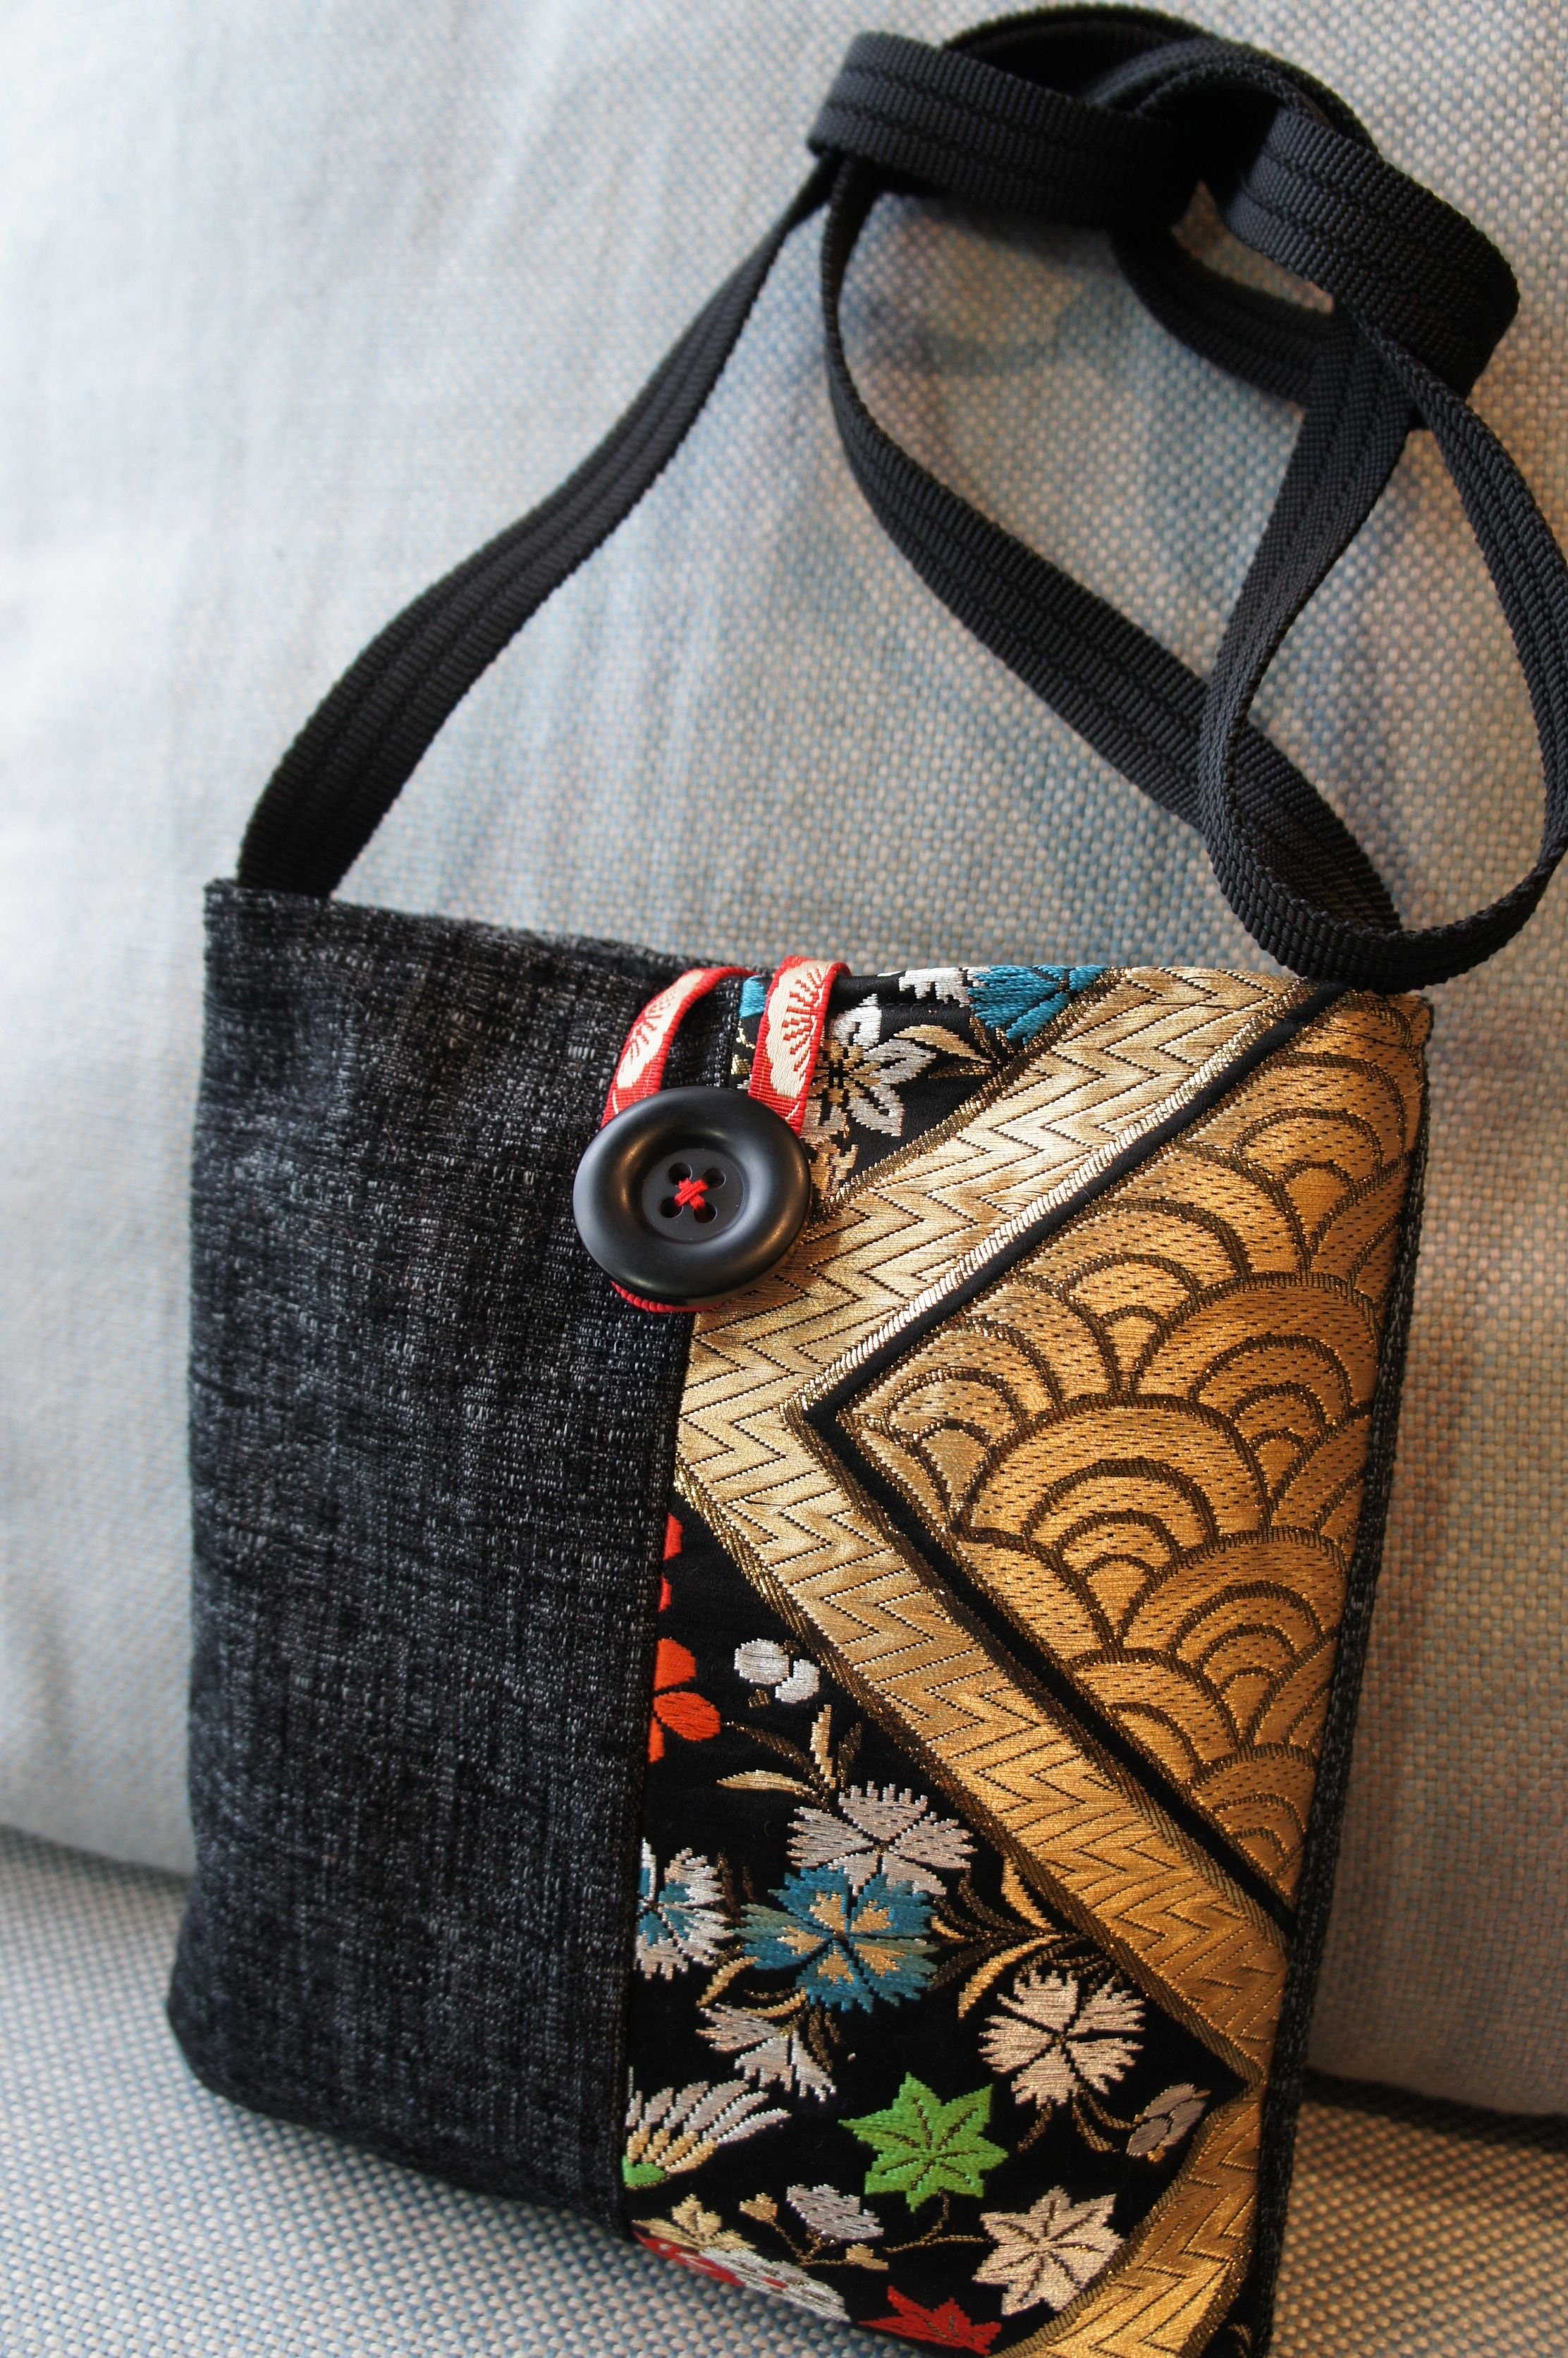 Fabric Handbags patterns | Handmade Fabric Bags | DIY Fabric Bag Design | Fabric  Handbags For Ladies - YouTube